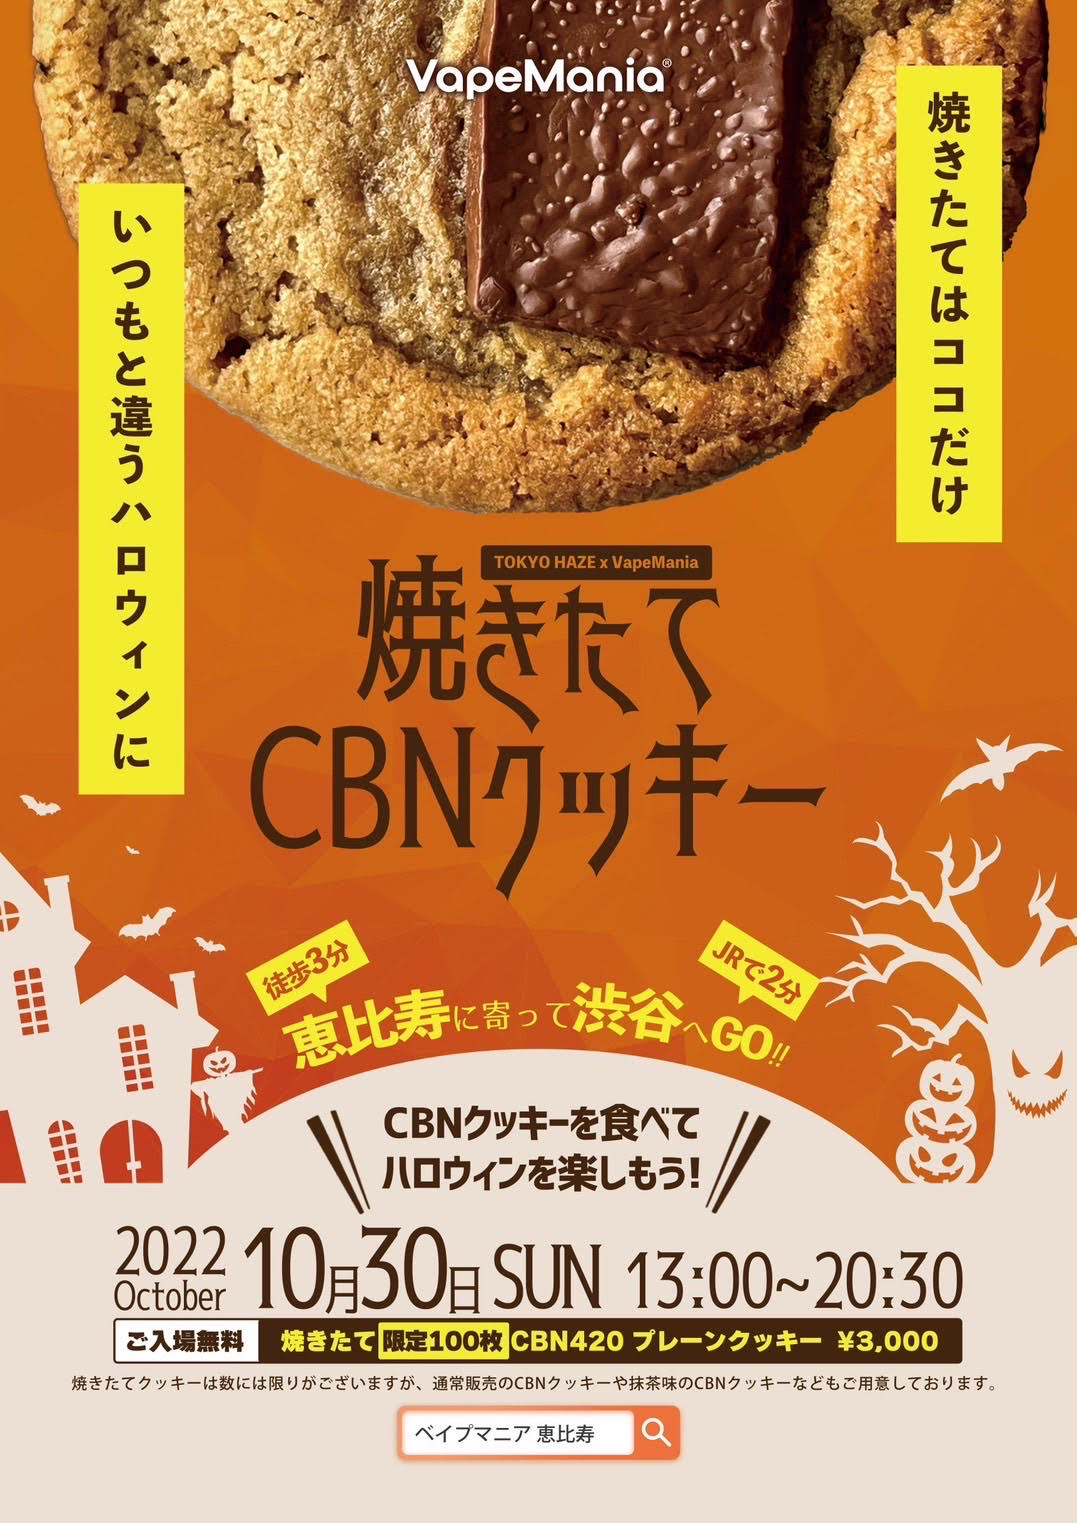 CBNクッキー誕生の秘話